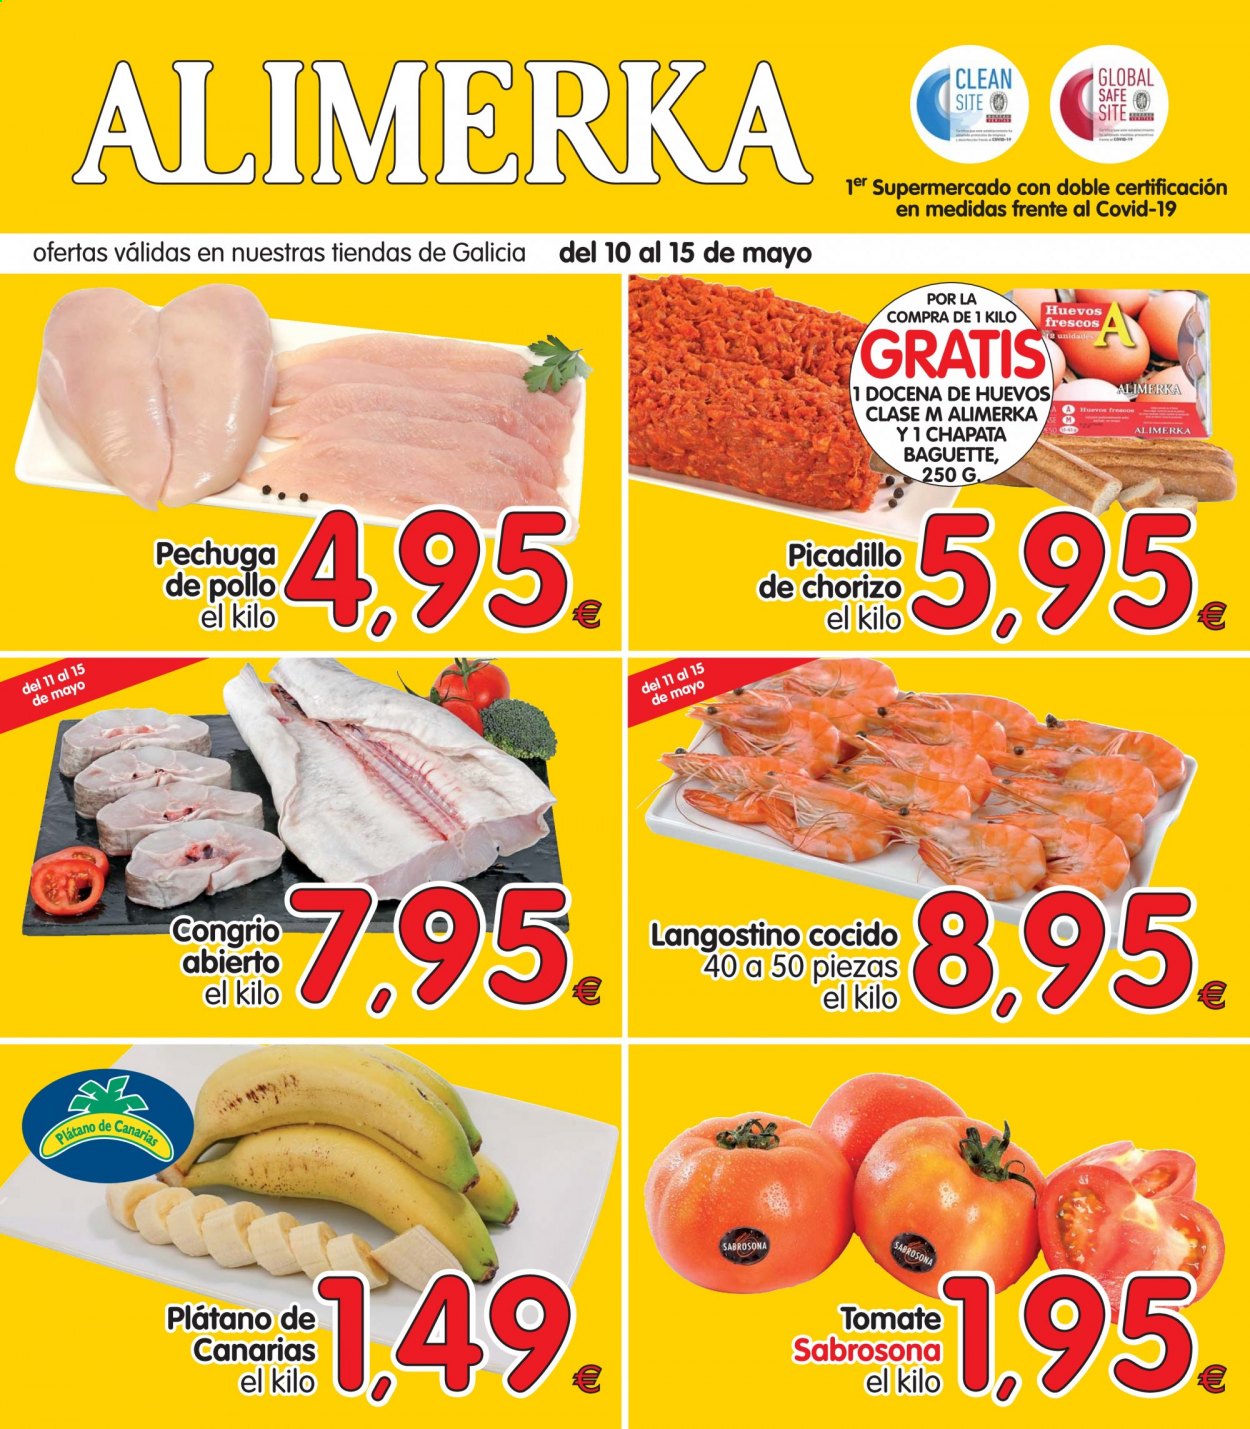 thumbnail - Folleto actual Alimerka - 10/05/21 - 15/05/21 - Ventas - pechuga de pollo, pollo, plátano, tomate, baguette, chapata, langostino, picadillo, chorizo. Página 1.